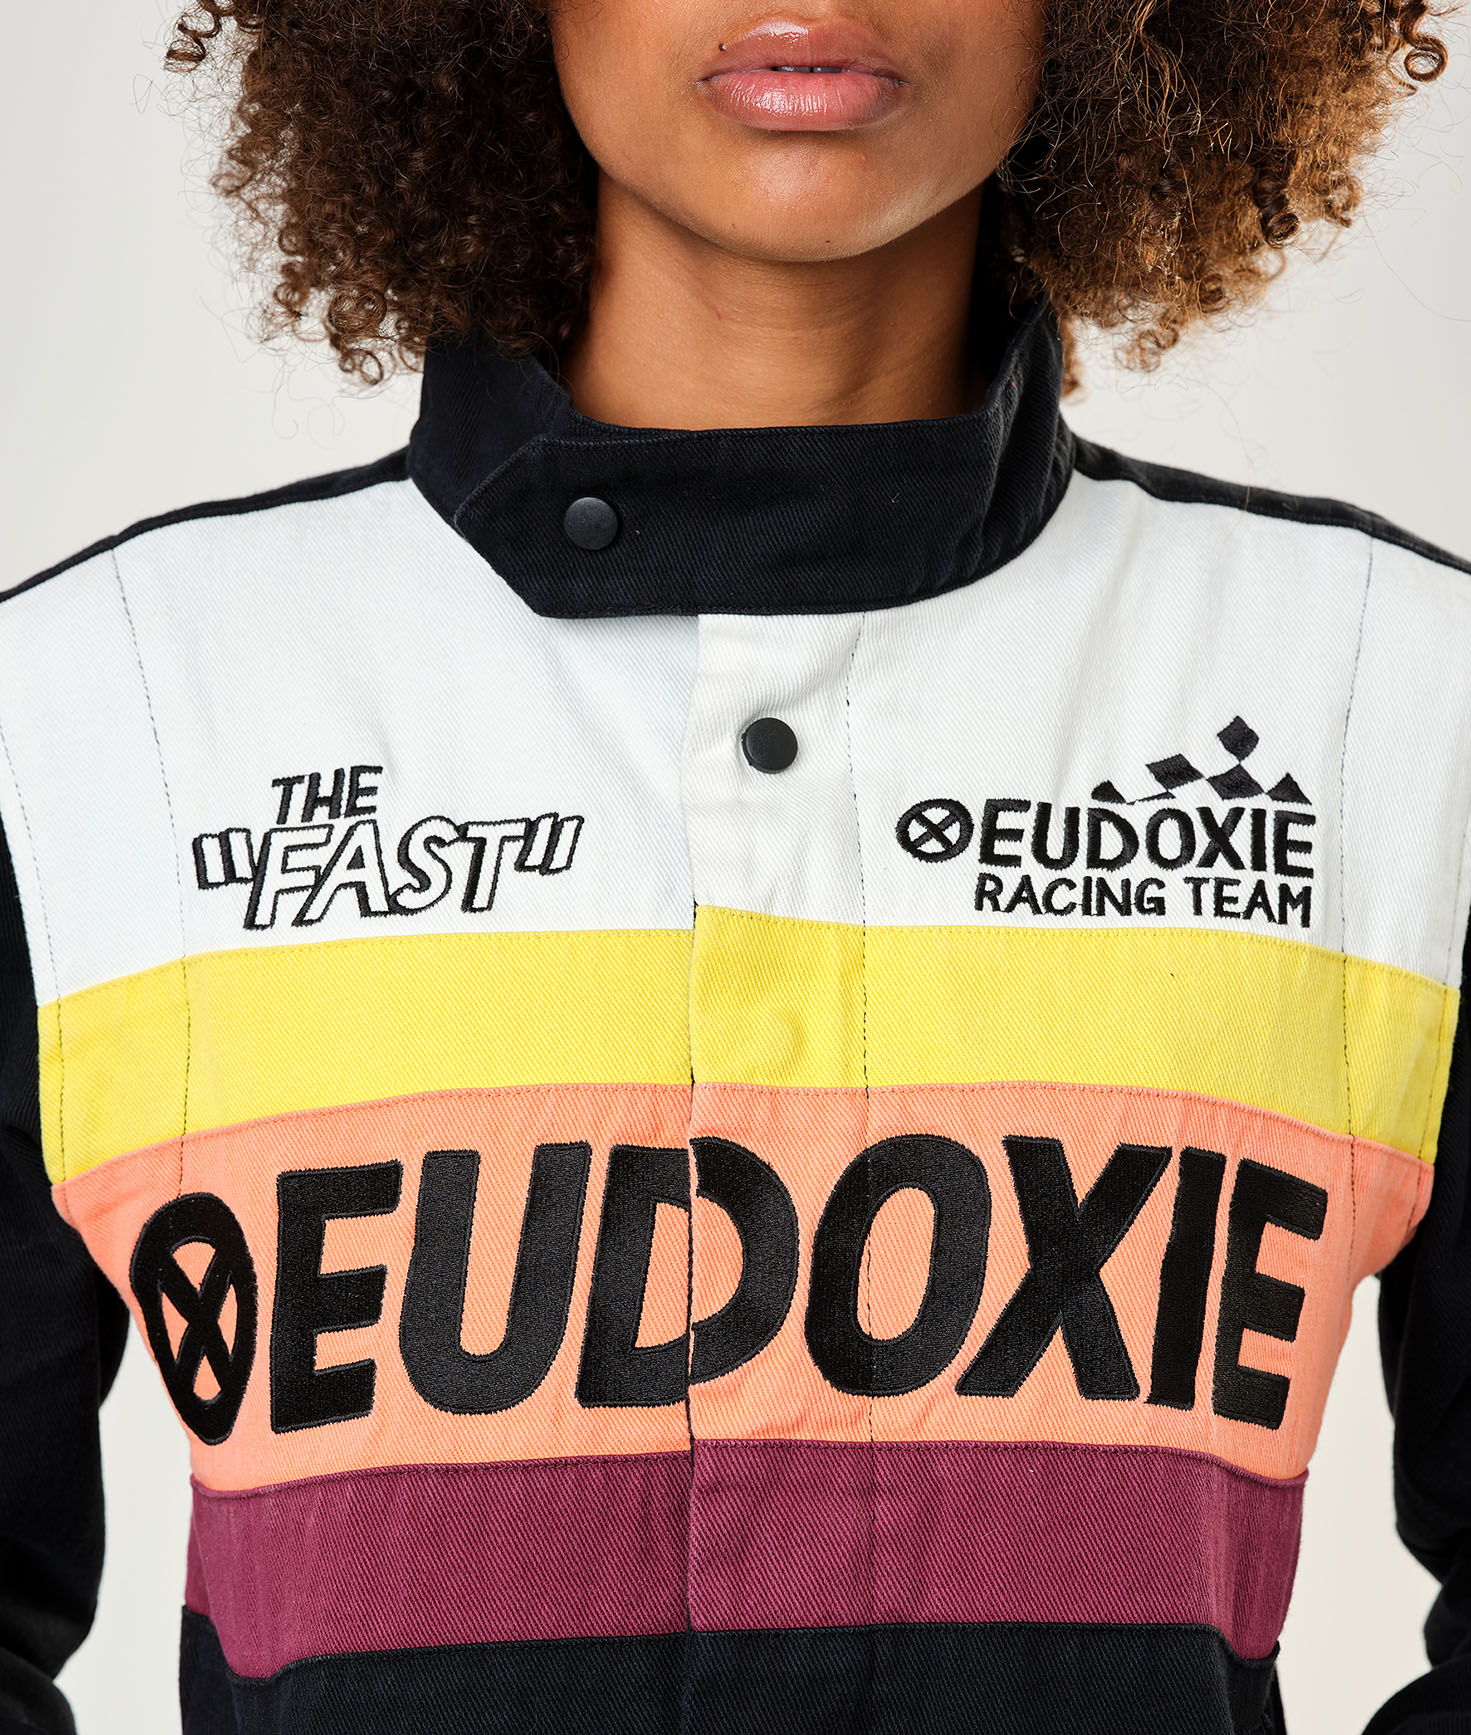 eudoxie-jacket-nascar-racing-femme-moto-racing-team-veste-violet-orange-jaune-vintage-1.jpg